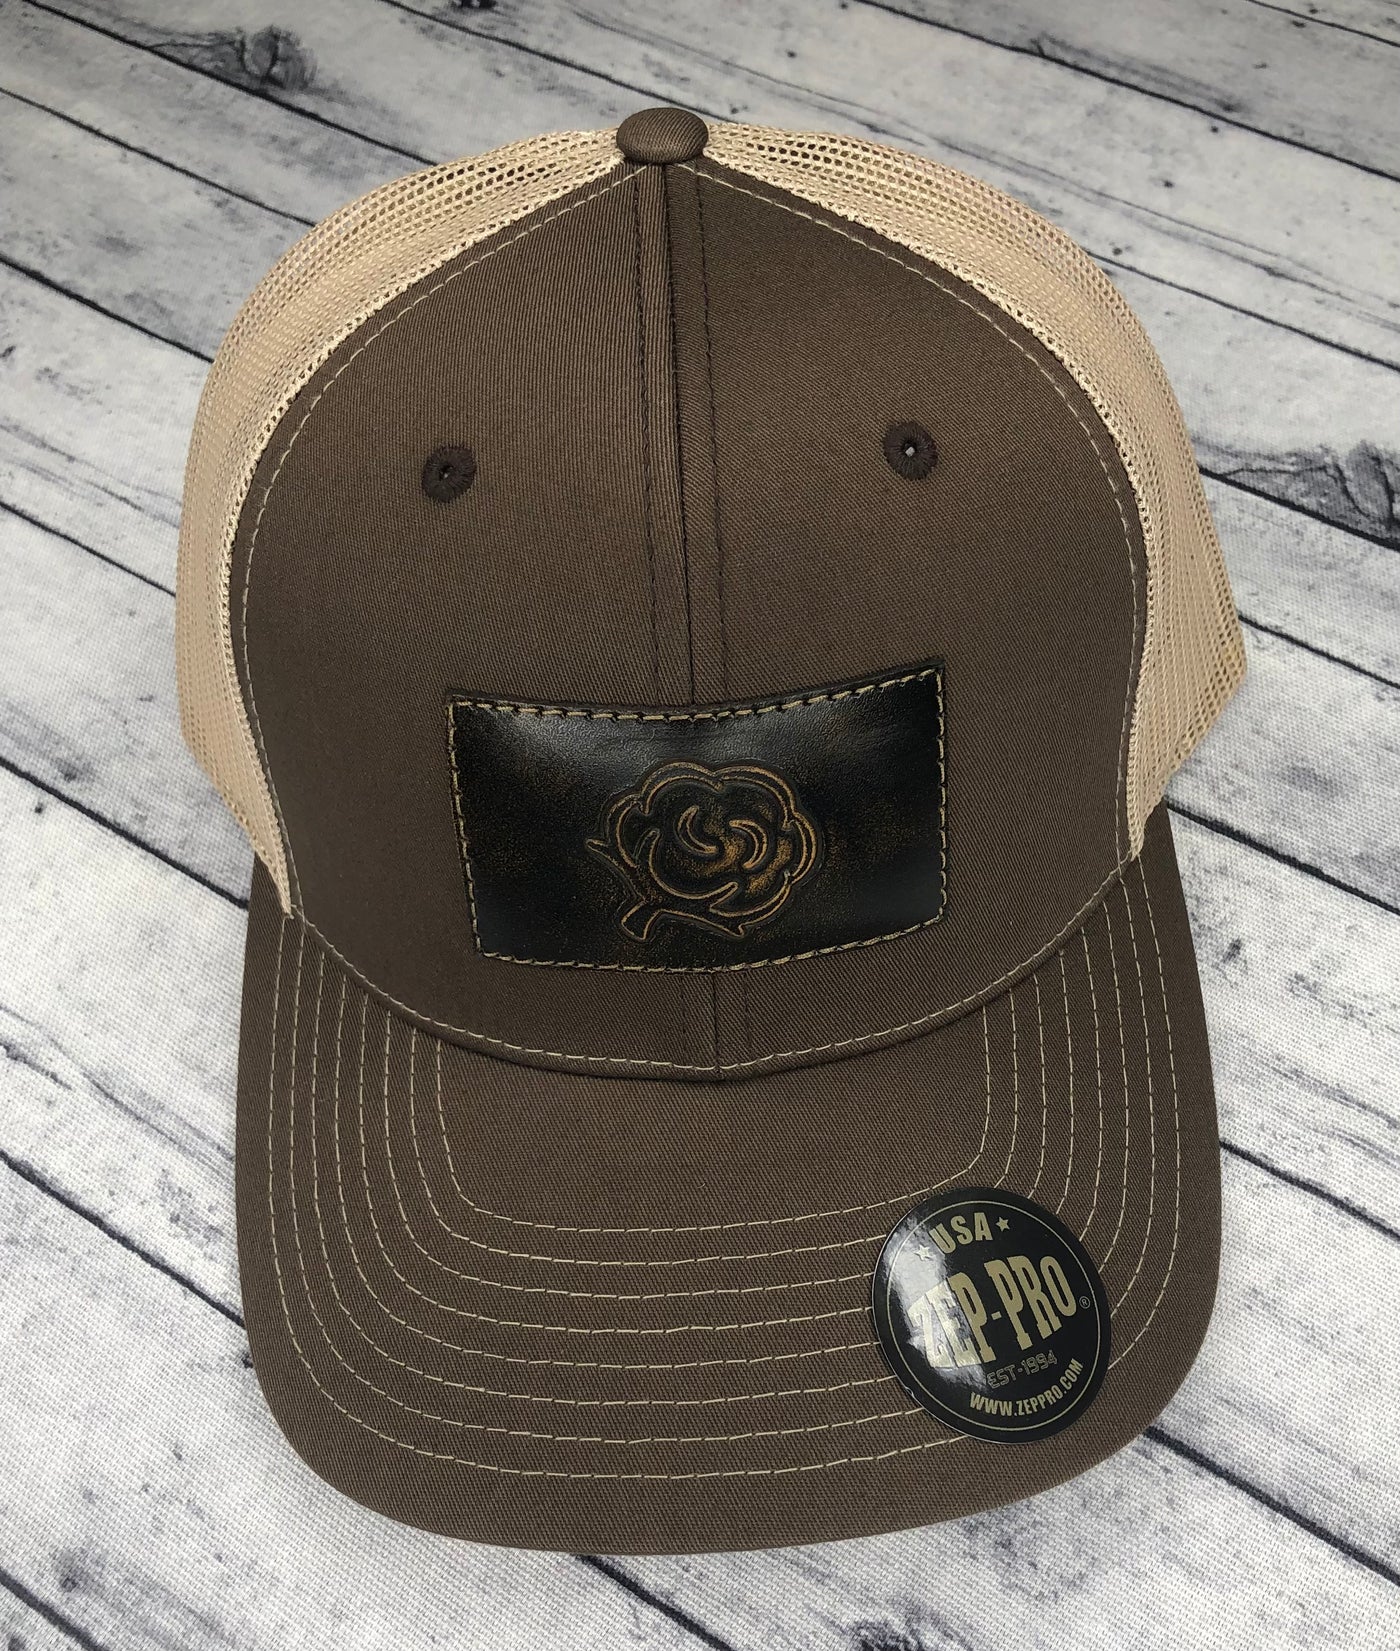 Zep-Pro Rectangular Cotton Brown/Khaki Hat